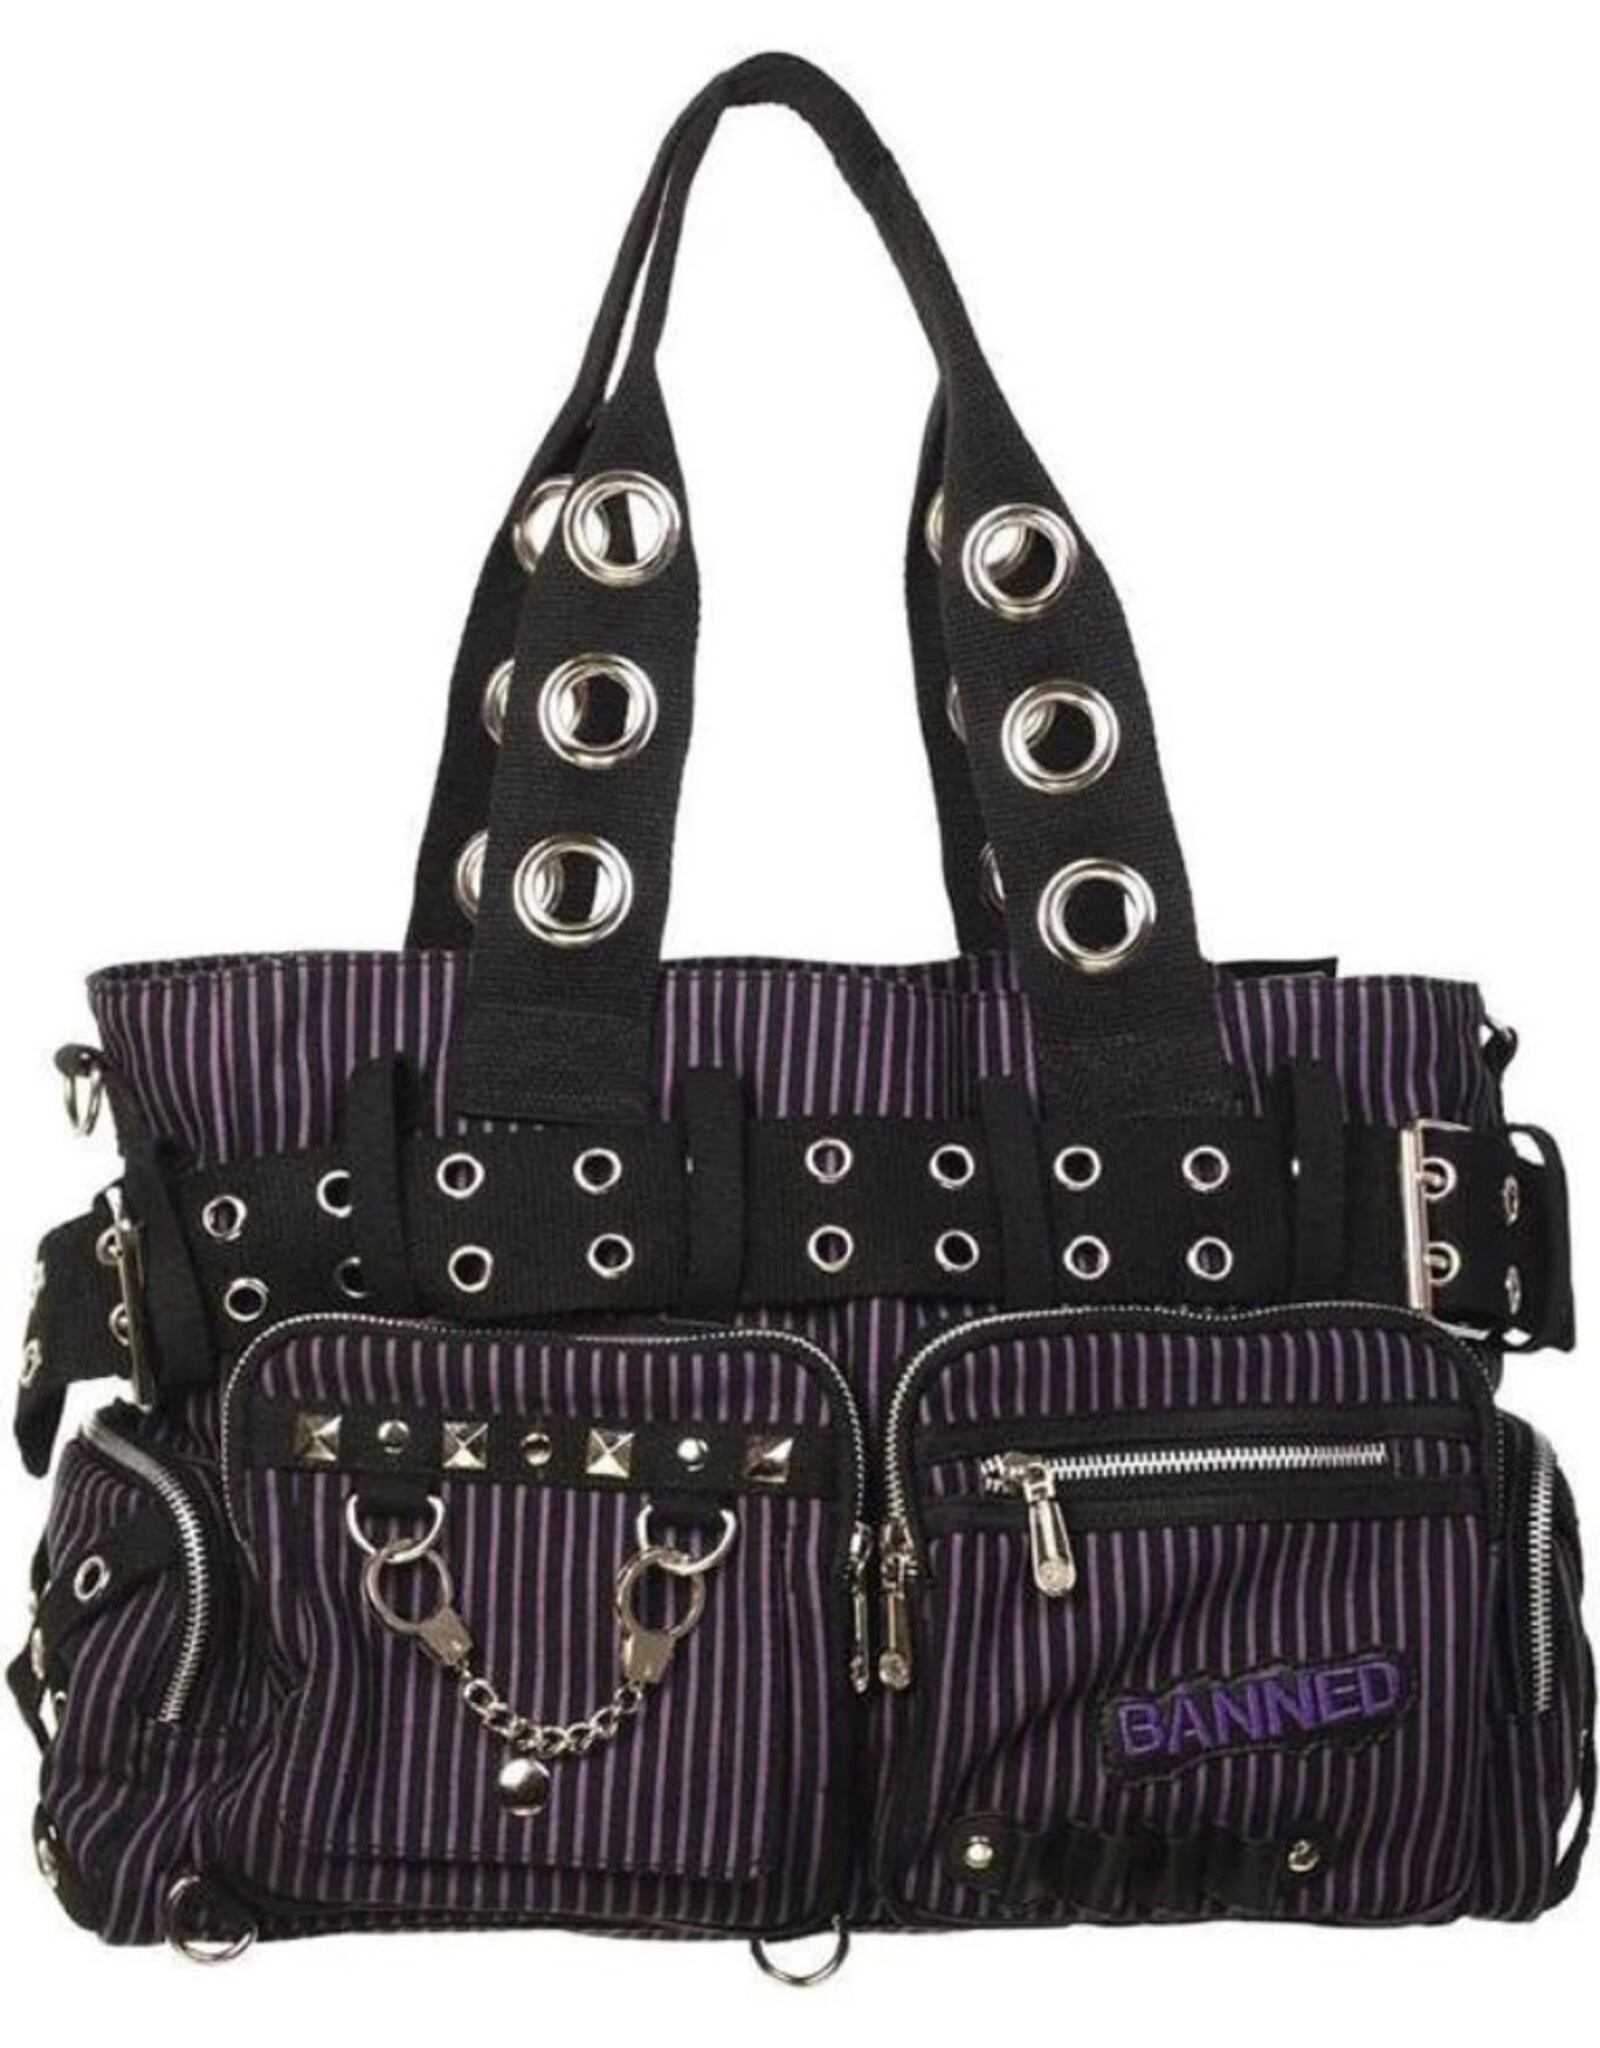 Banned Gothic bags Steampunk bags - Banned Sweet Revenge Handbag  (purple)